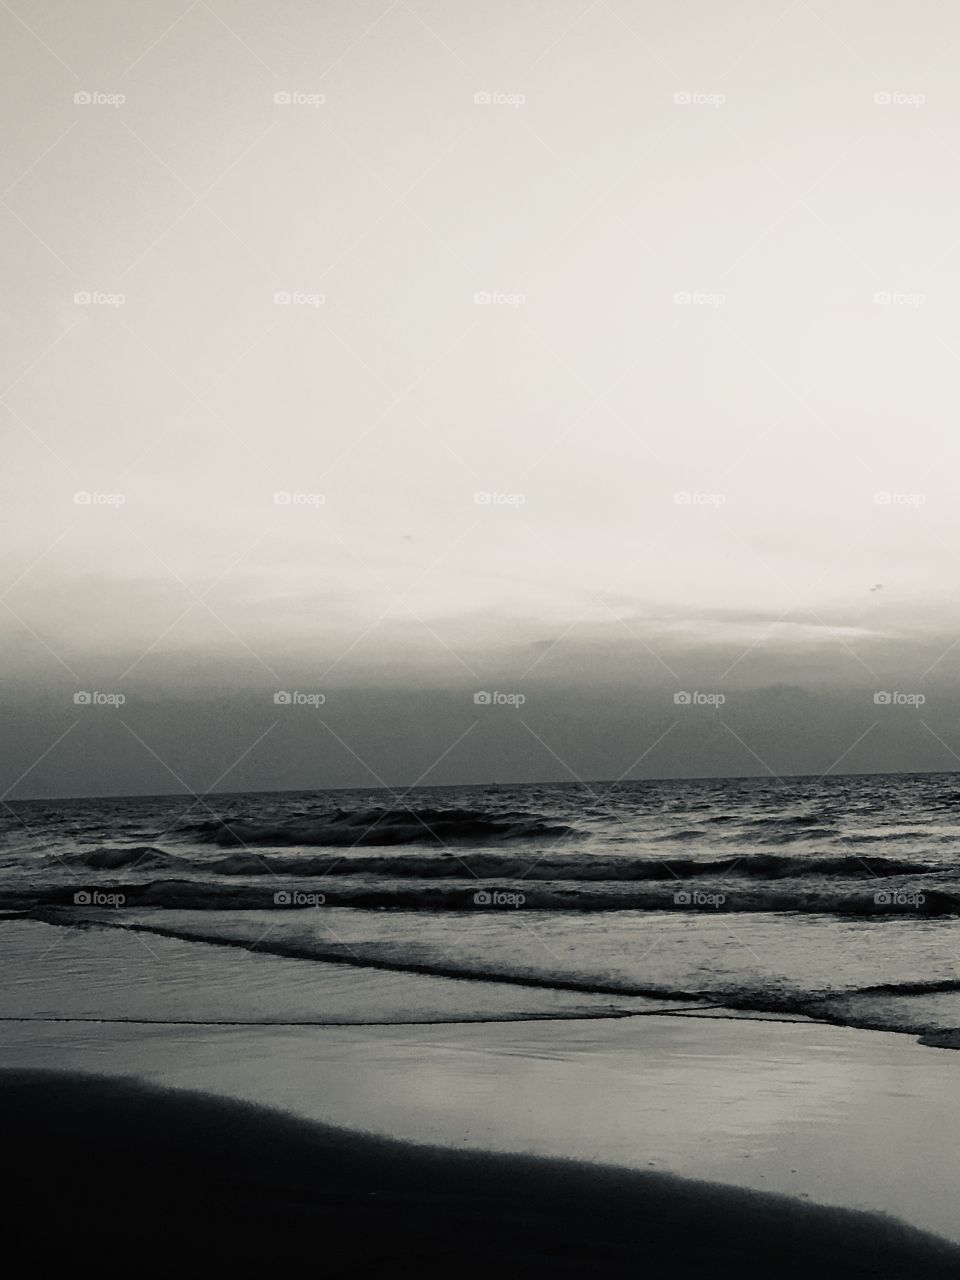 Beach in monochrome...